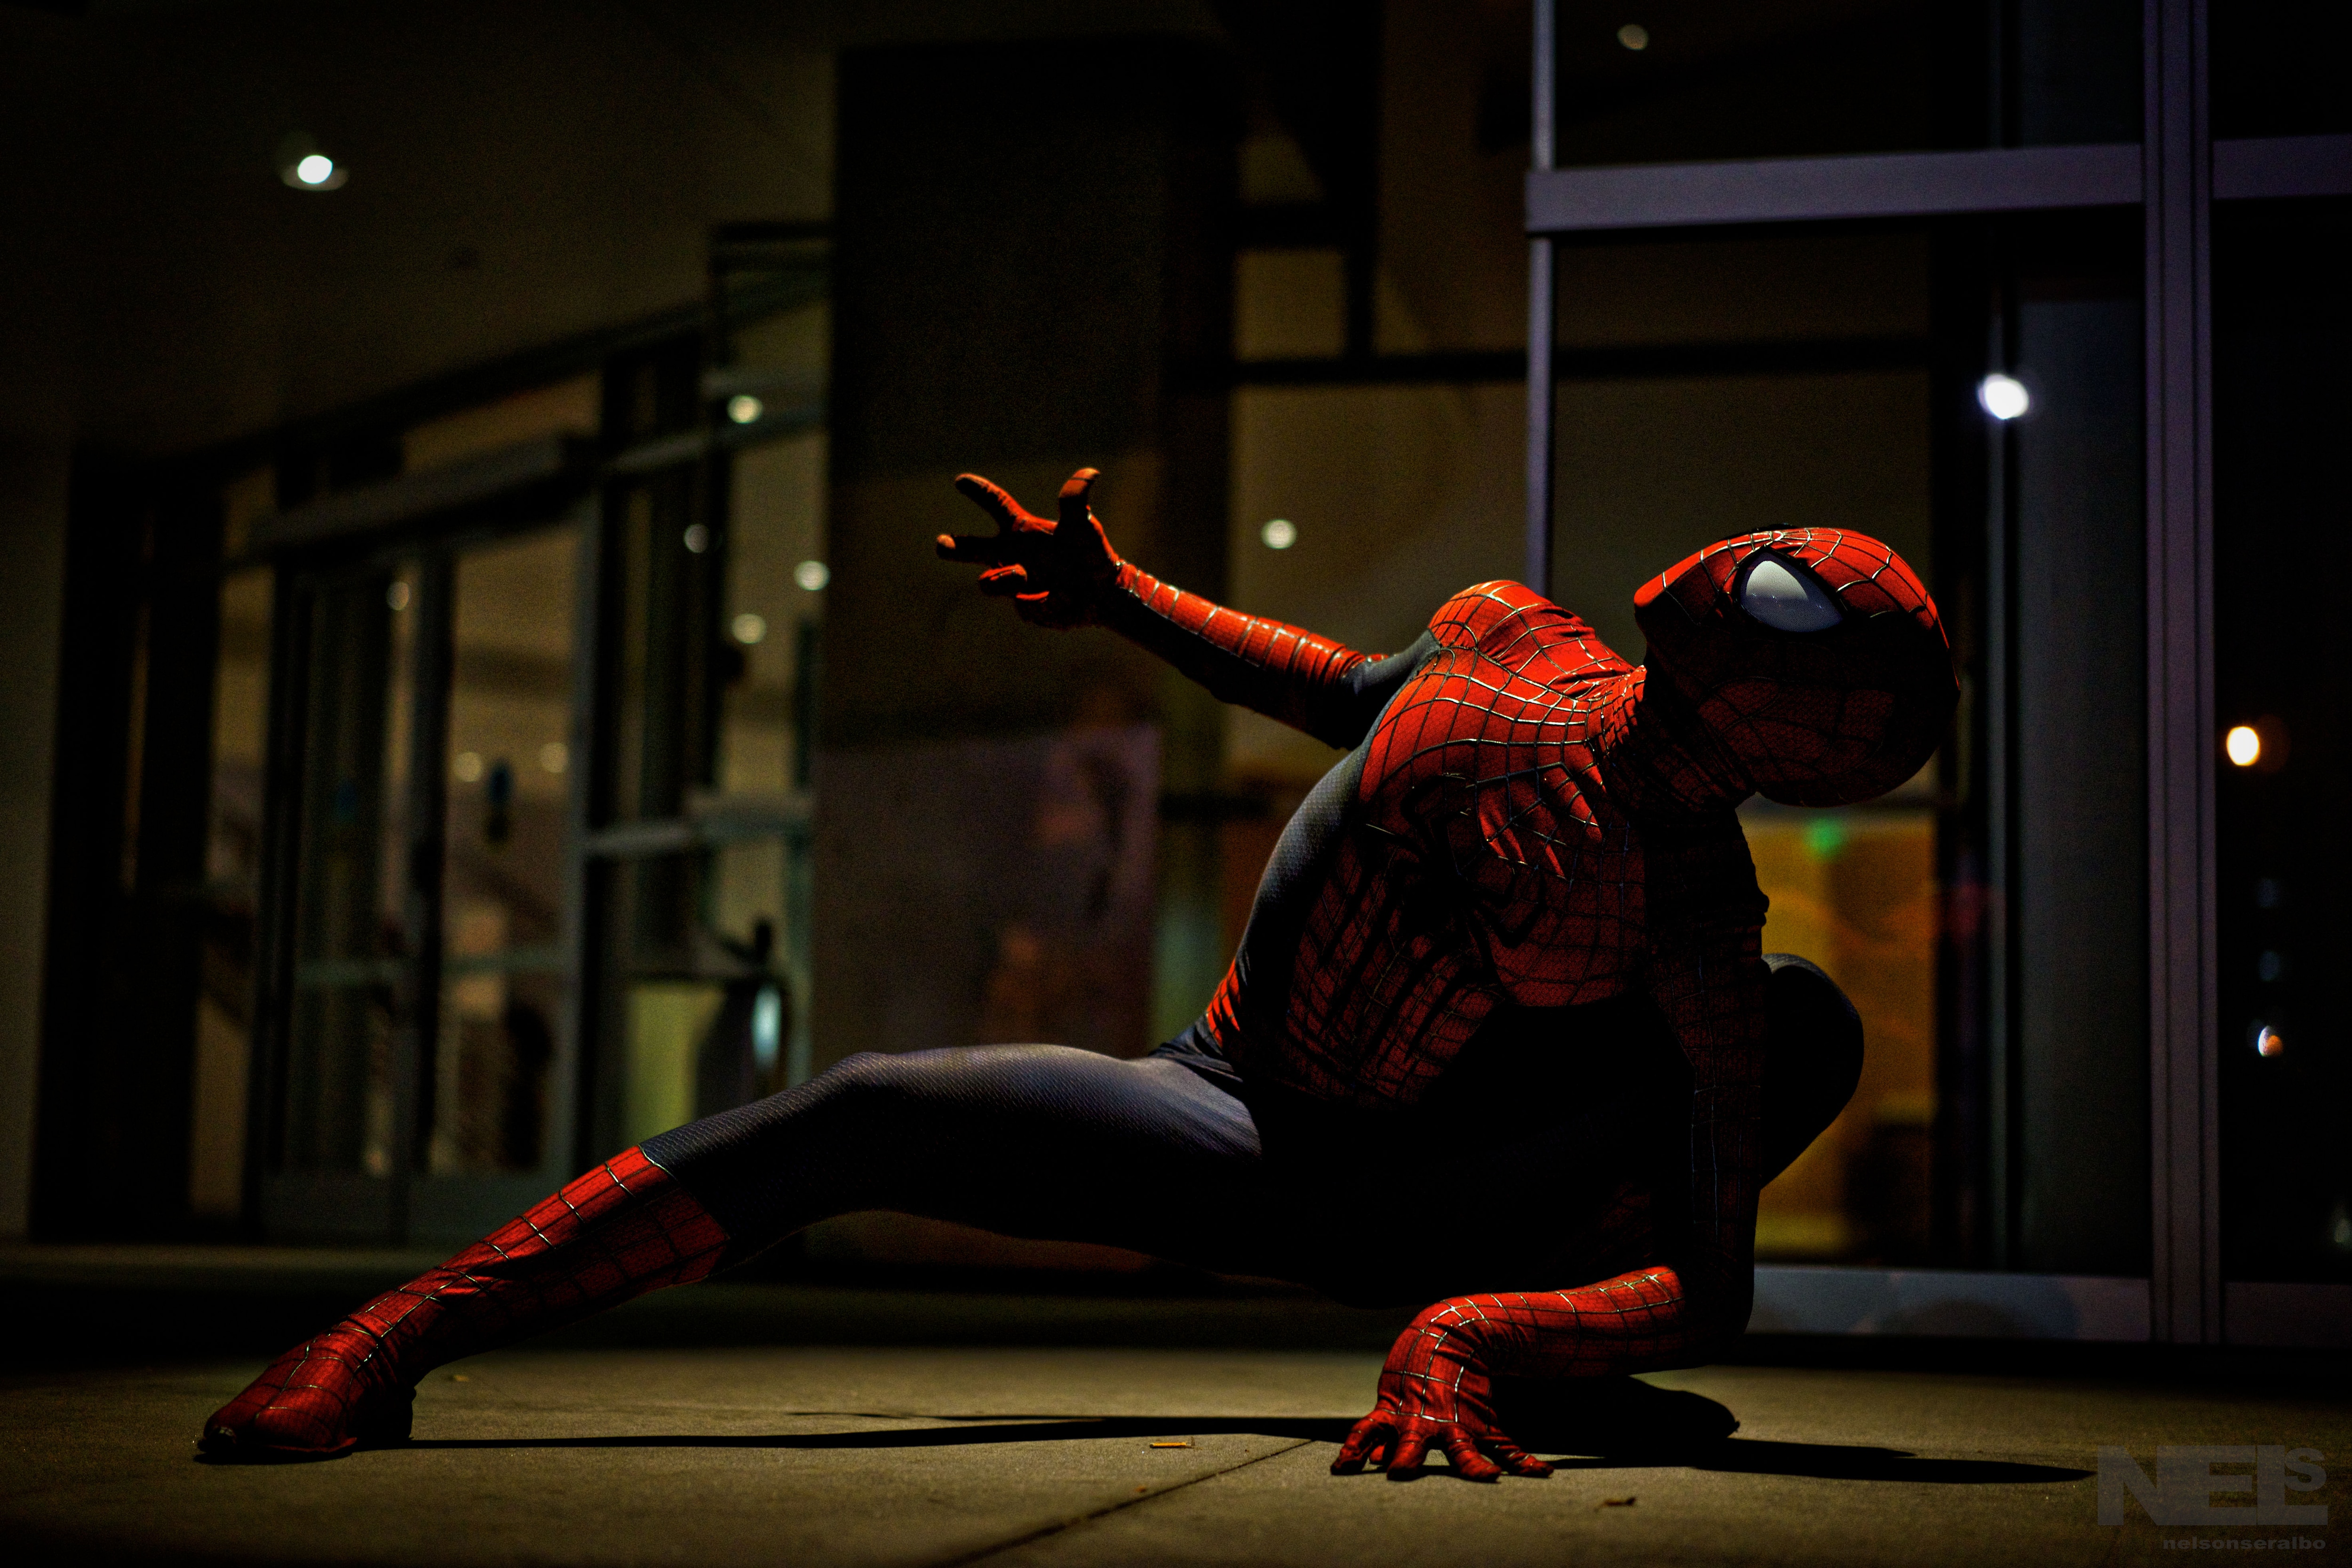 Cosplayer Chris Villain in his Spider-Man look